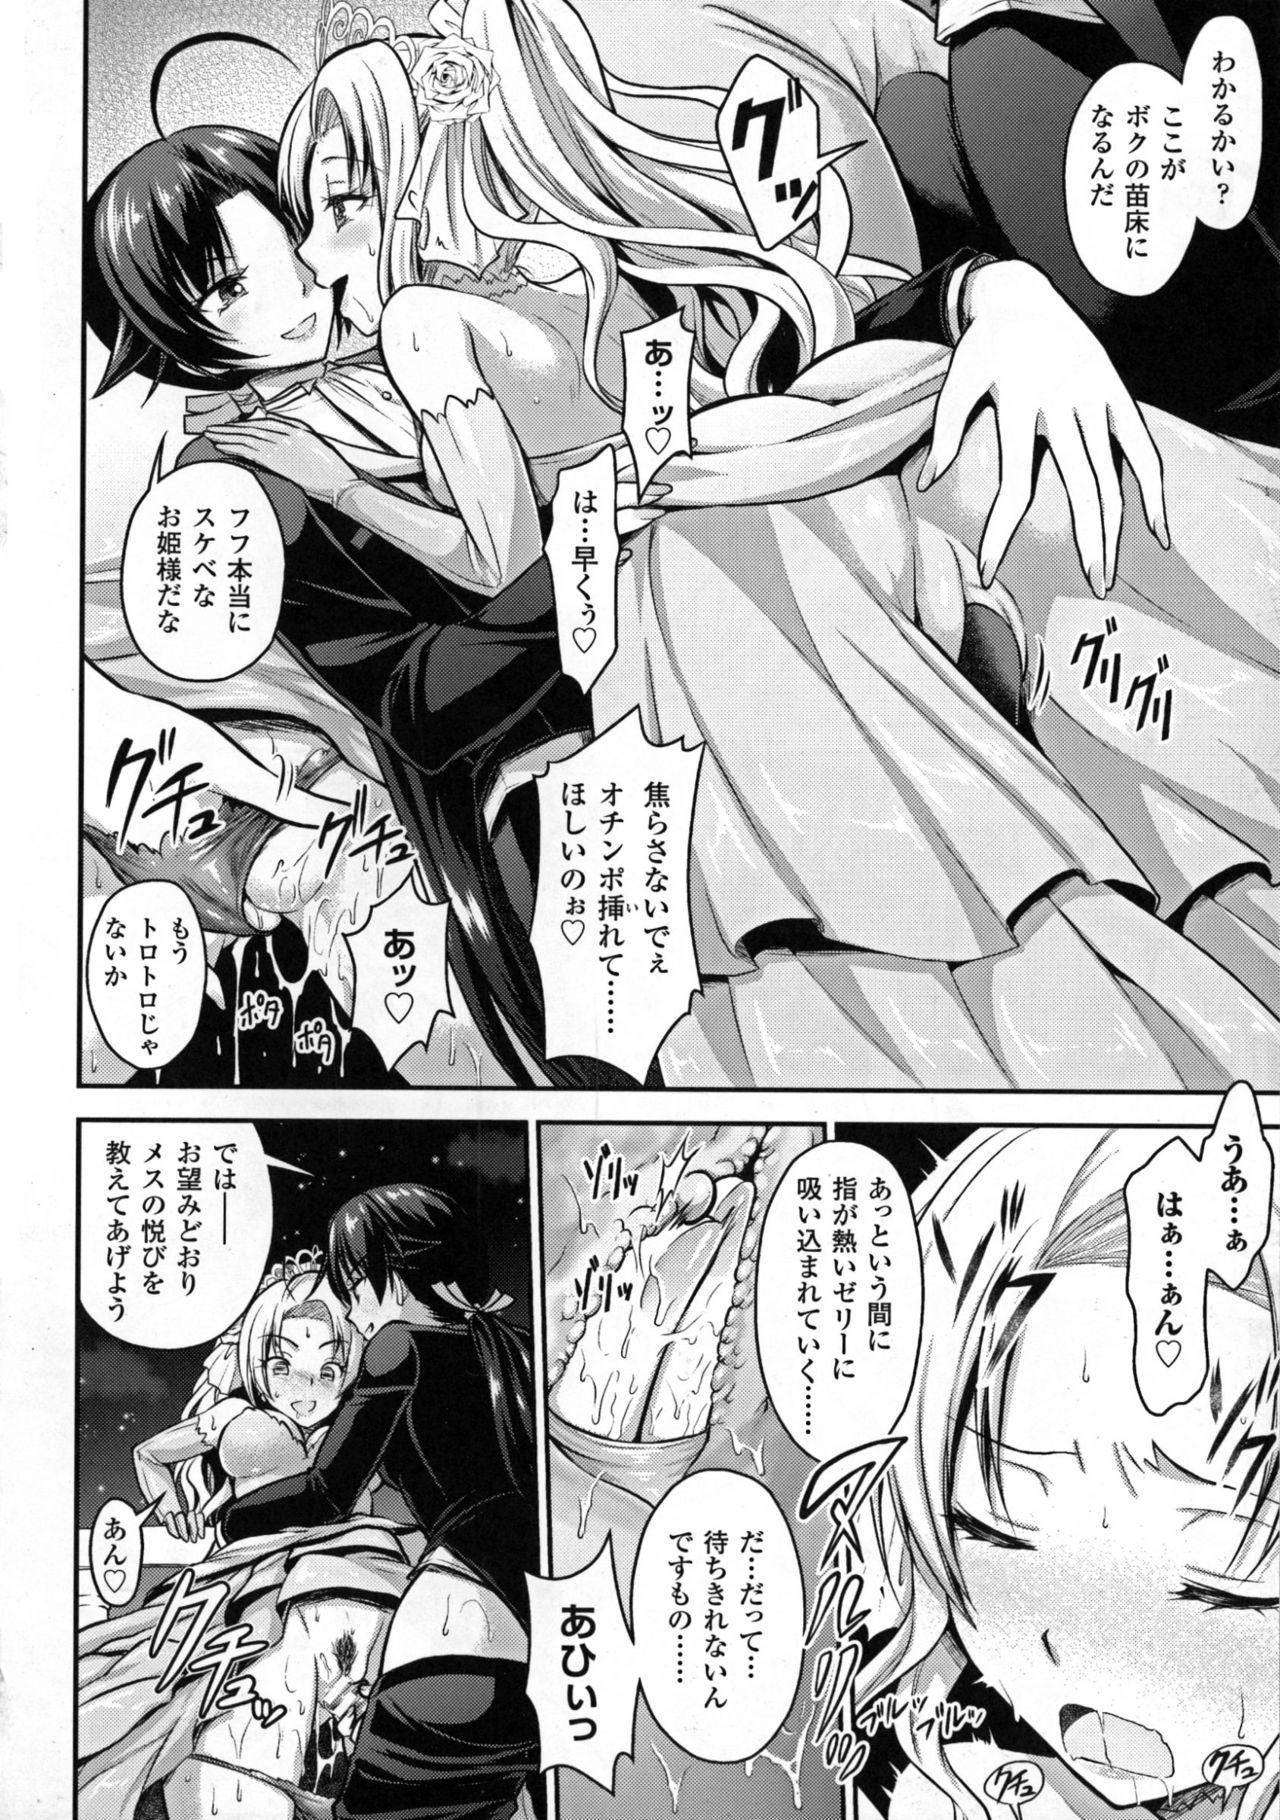 Seigi no Heroine Kangoku File DX vol. 5 25